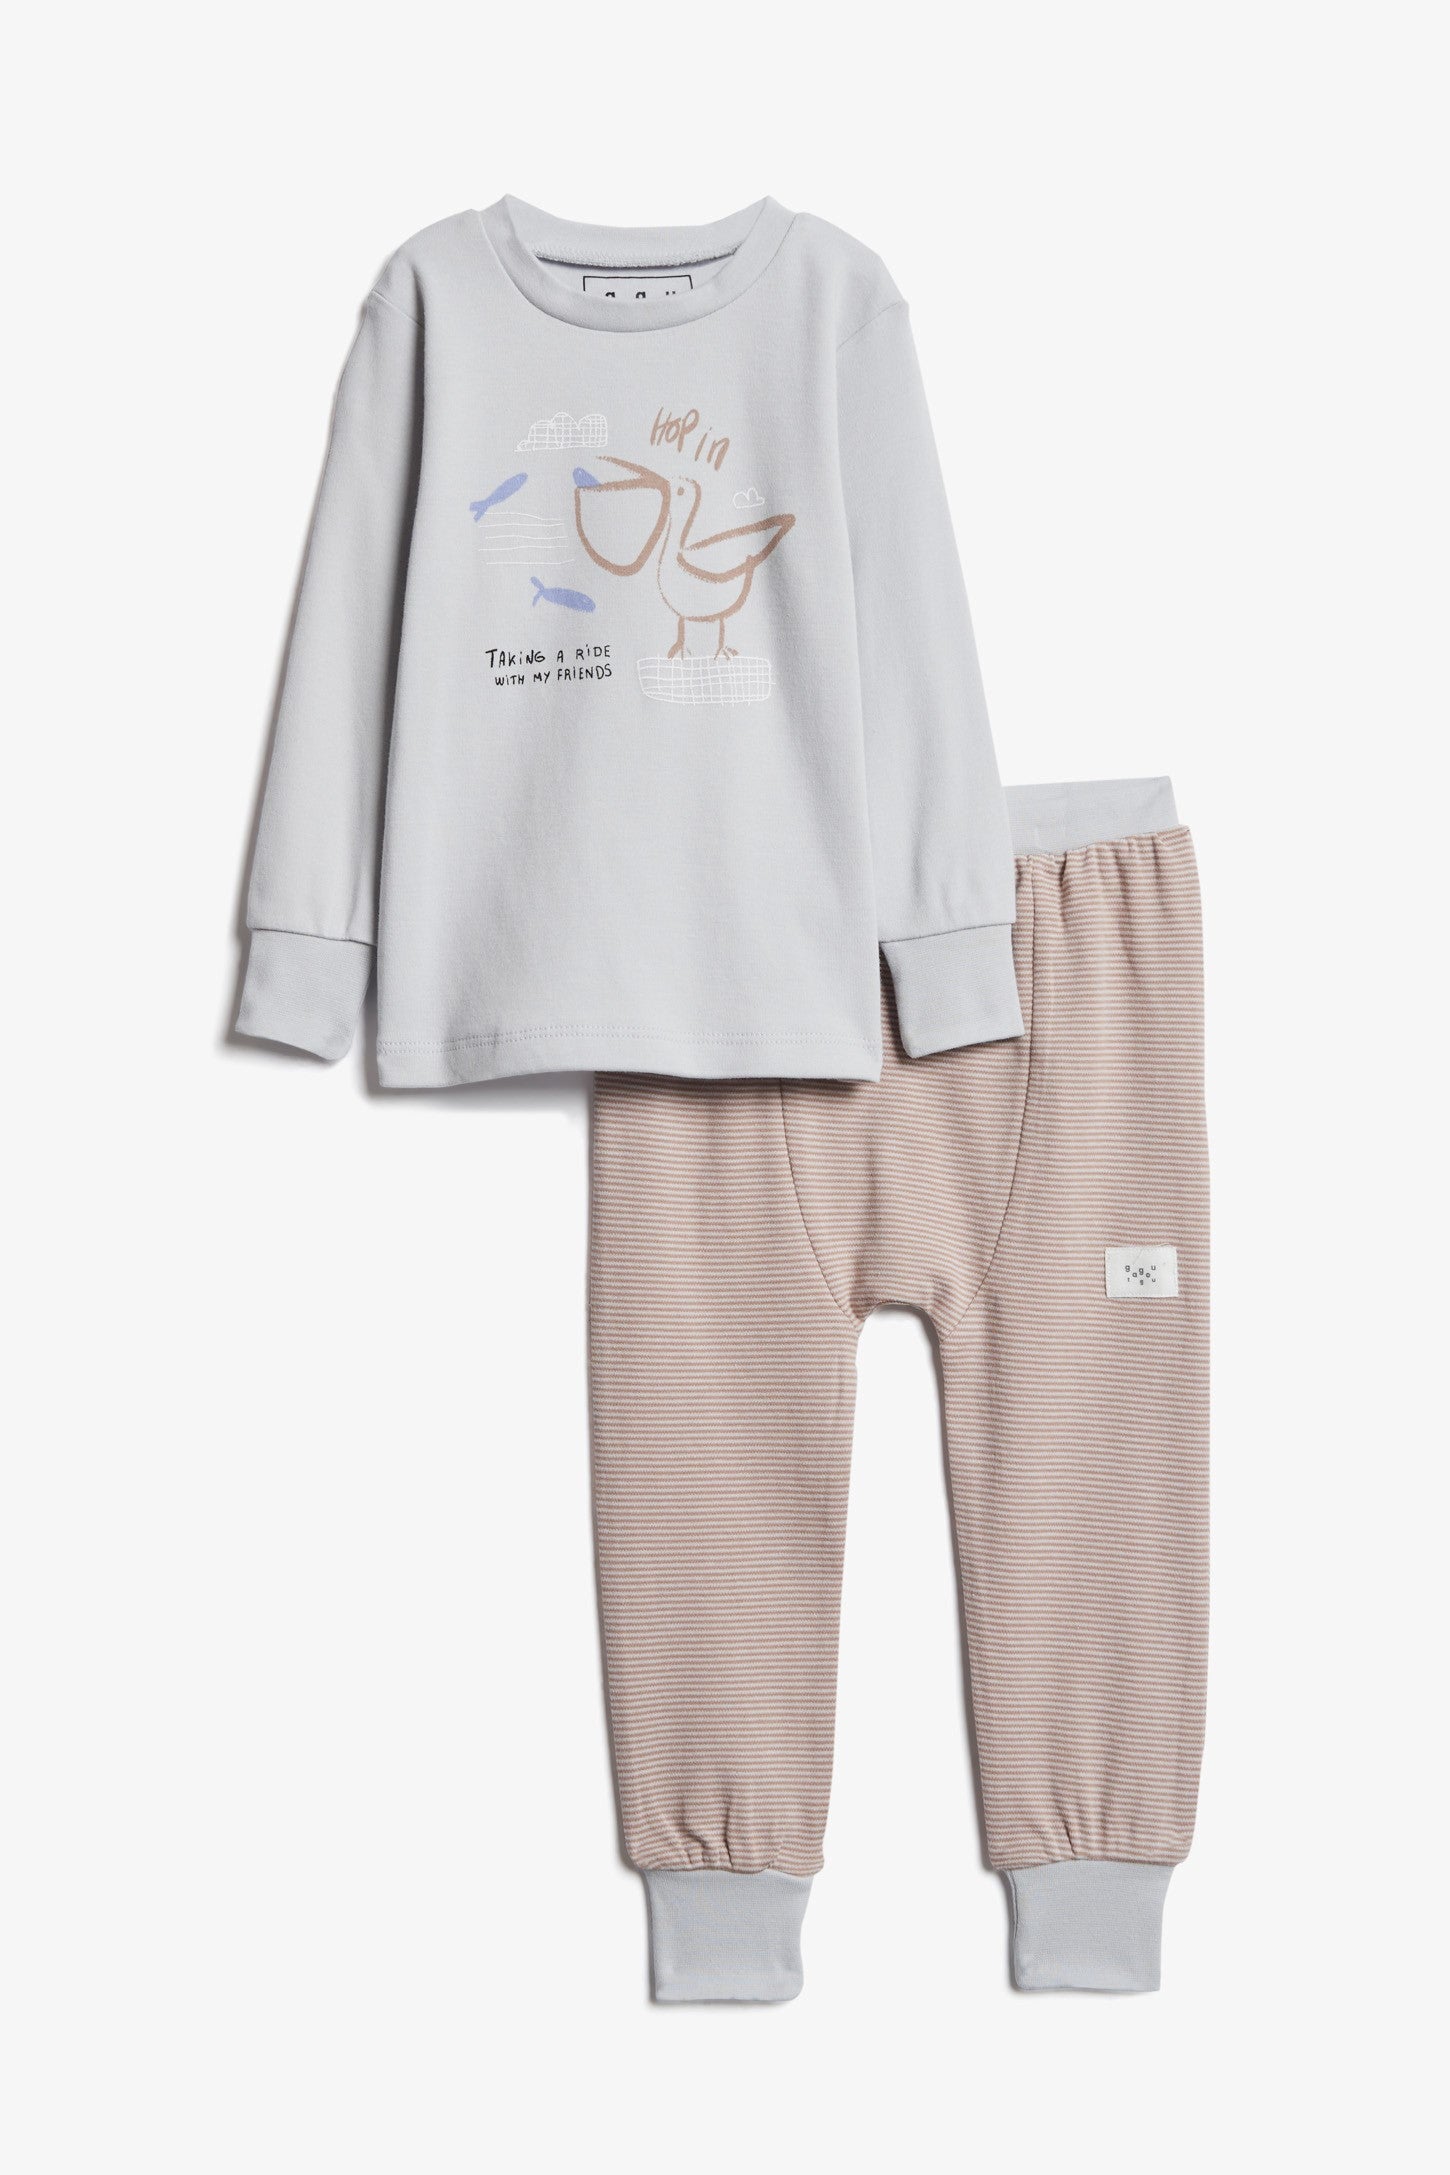 Pyjama 2-pièces imprimé, coton bio, 2/30$ - Bébé && GRIS